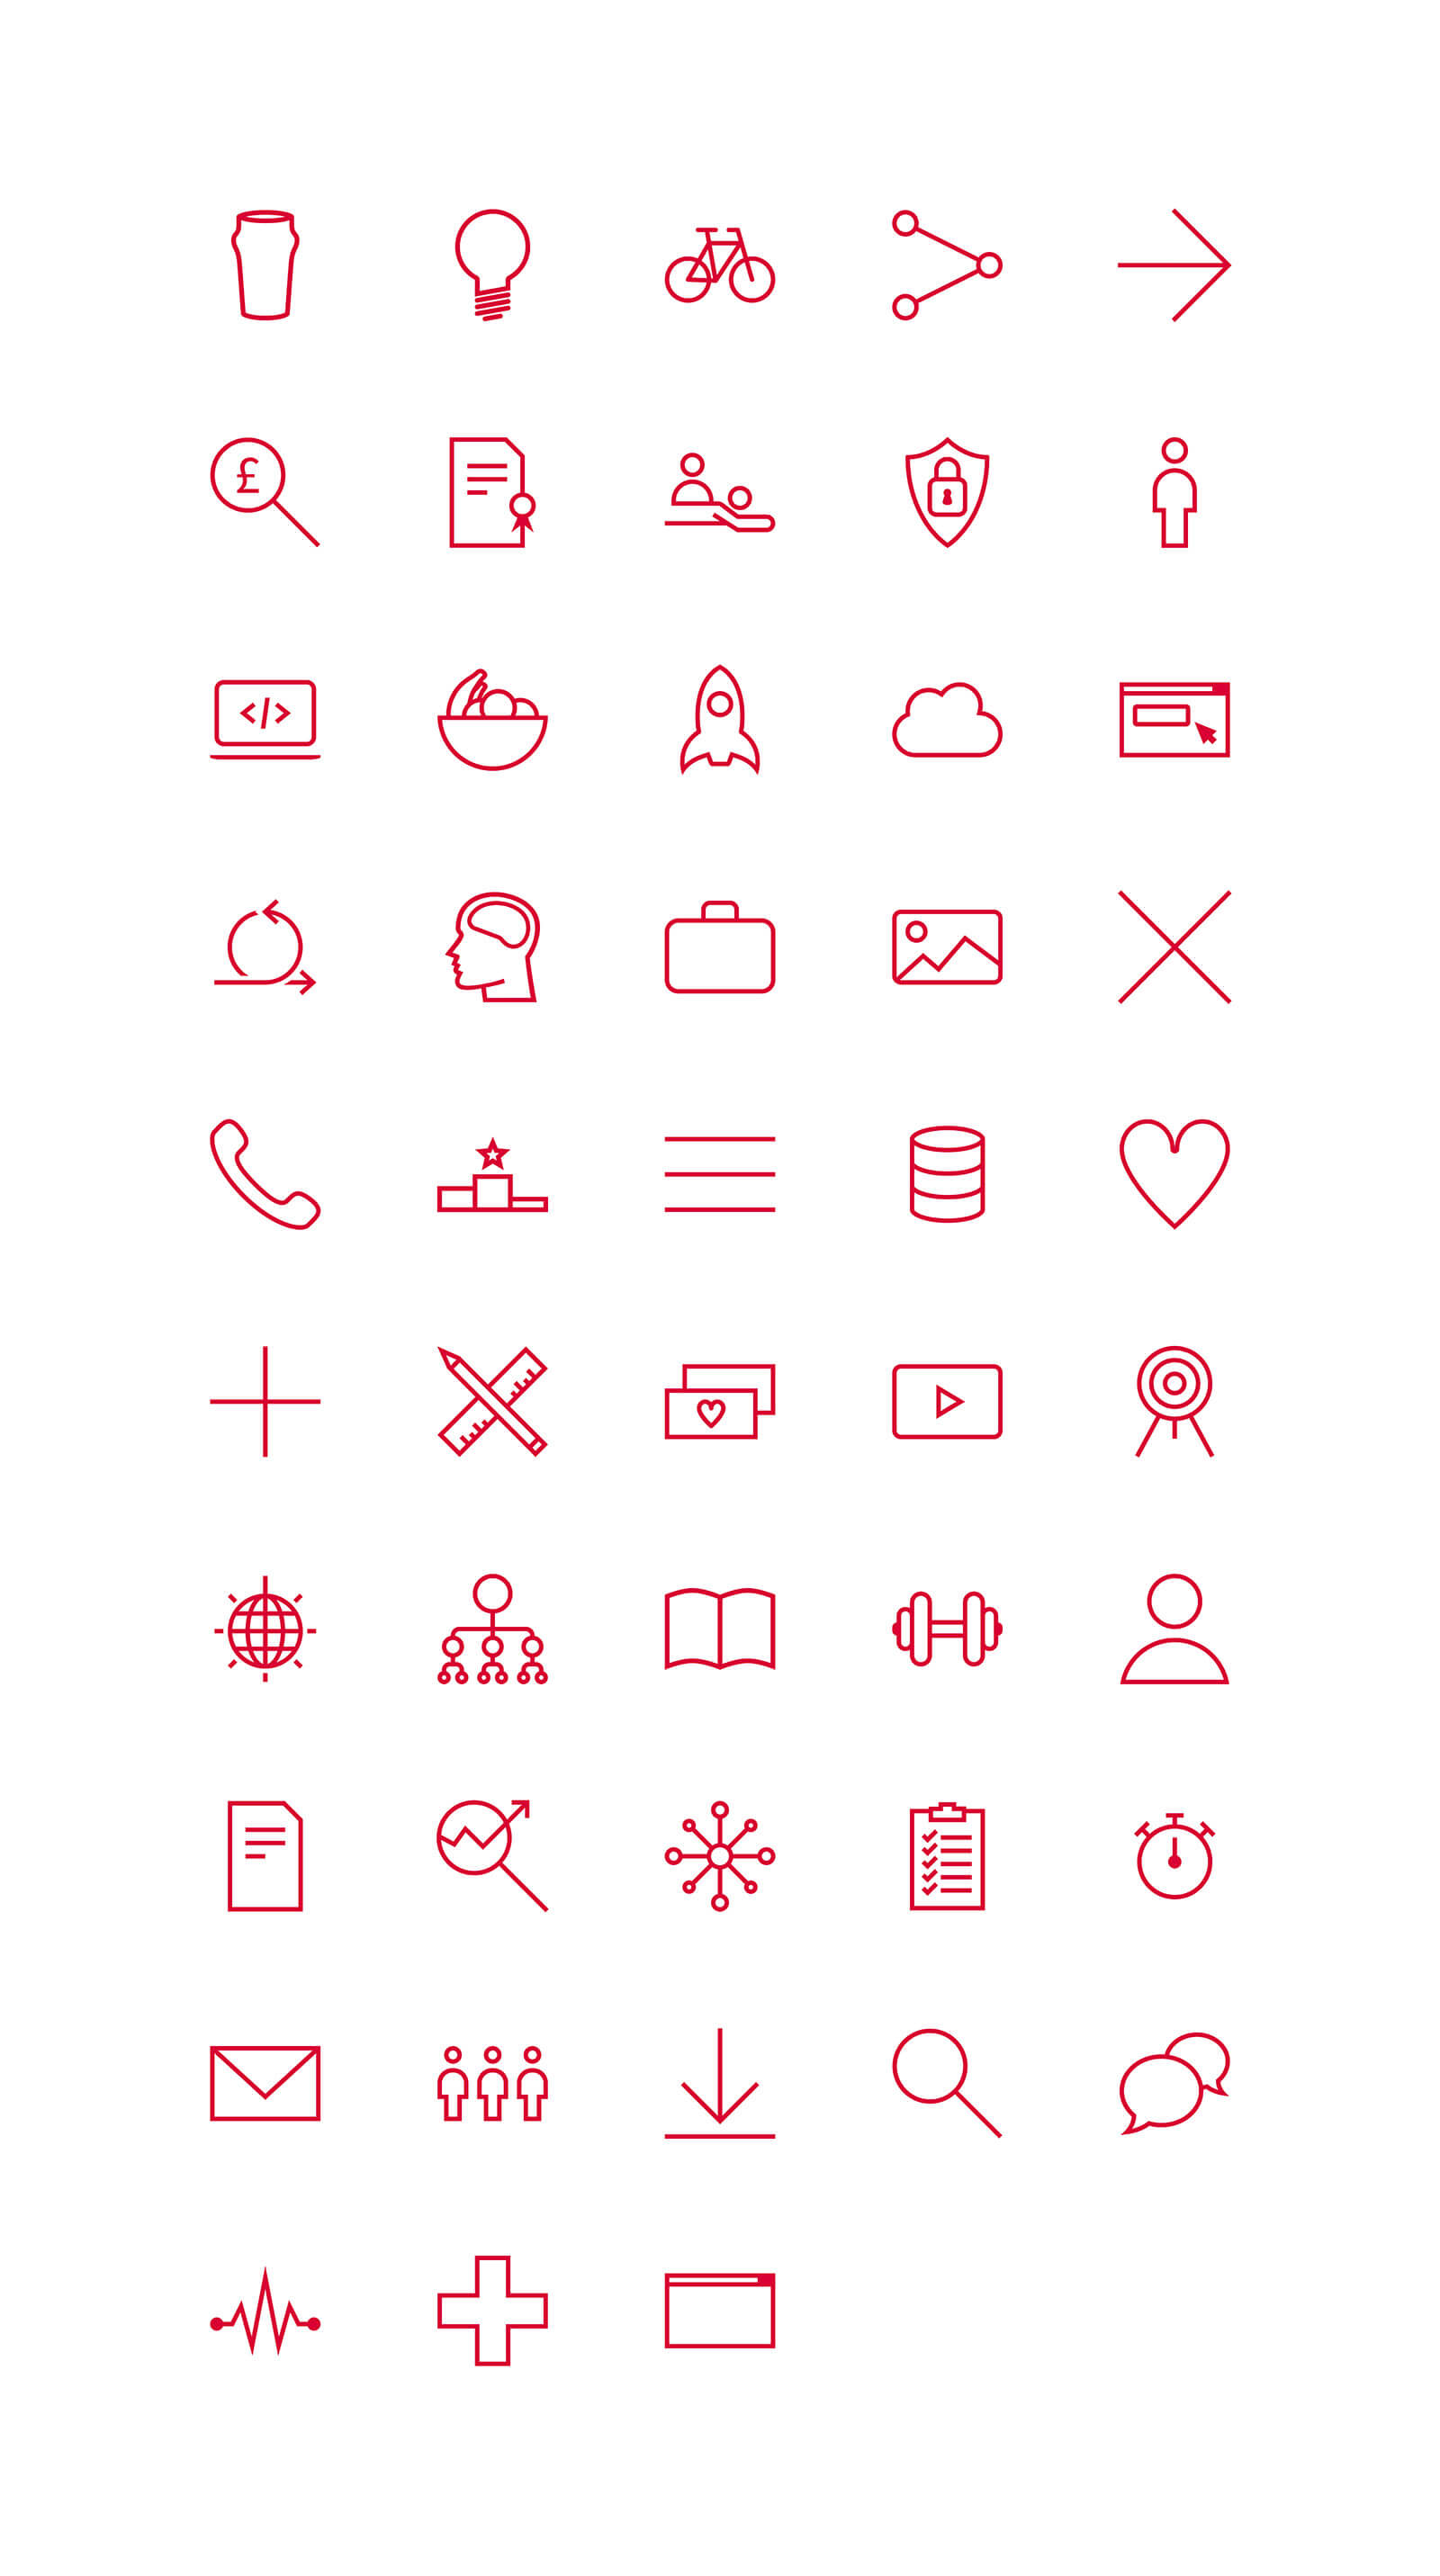 Full agency icon set grid